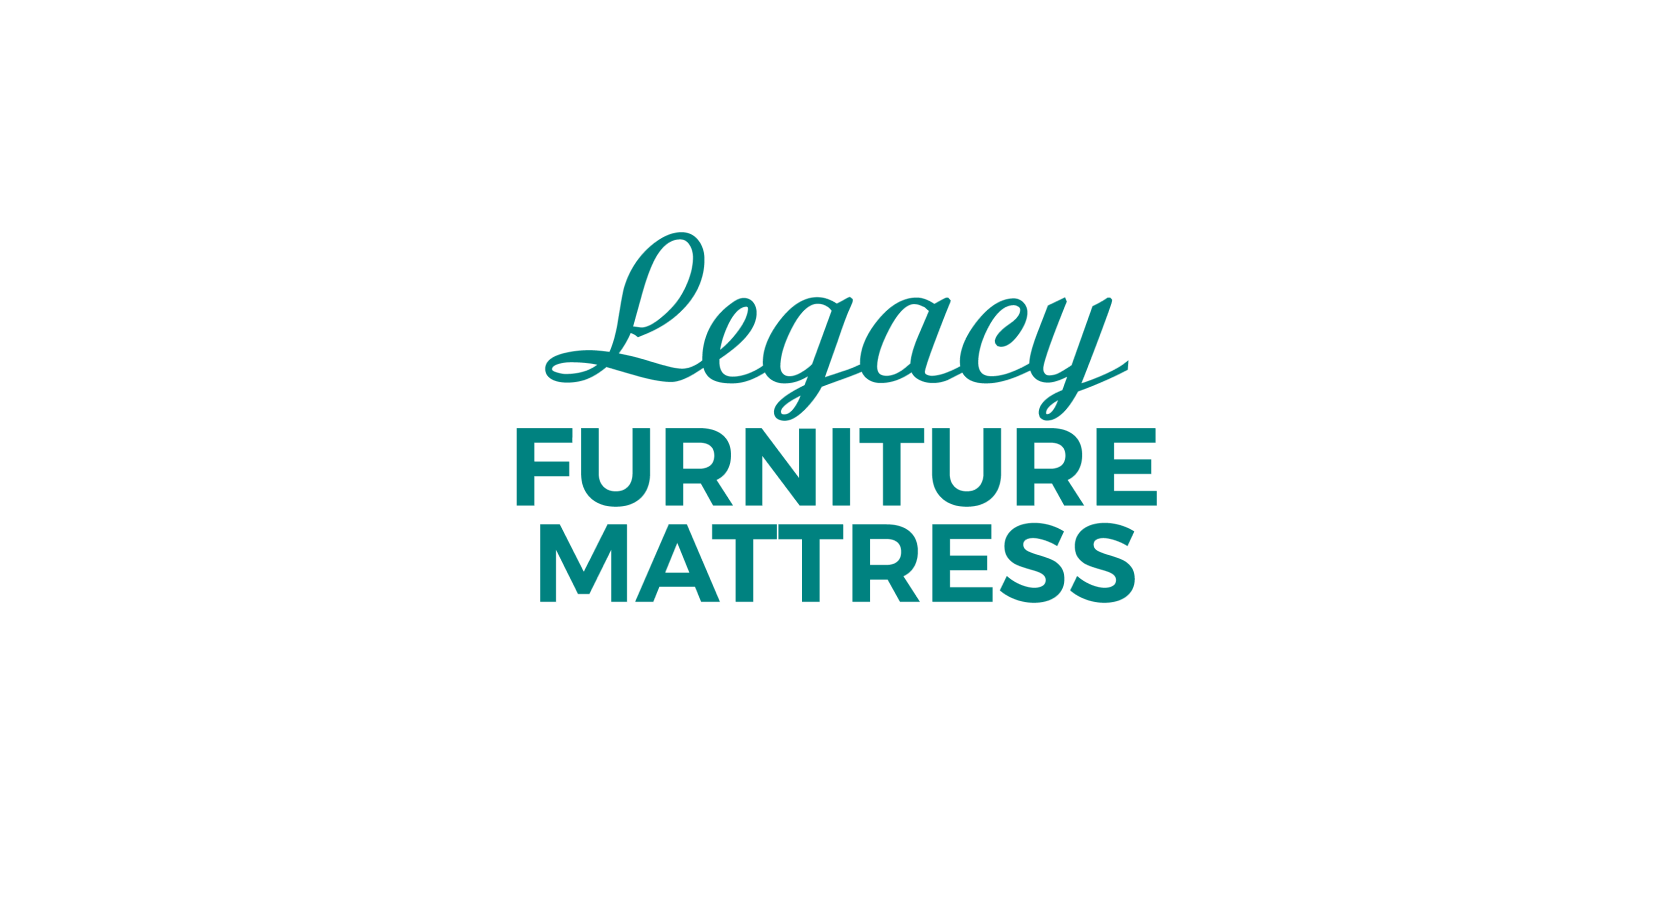 Legacy Furniture And Mattress - Karl Finley